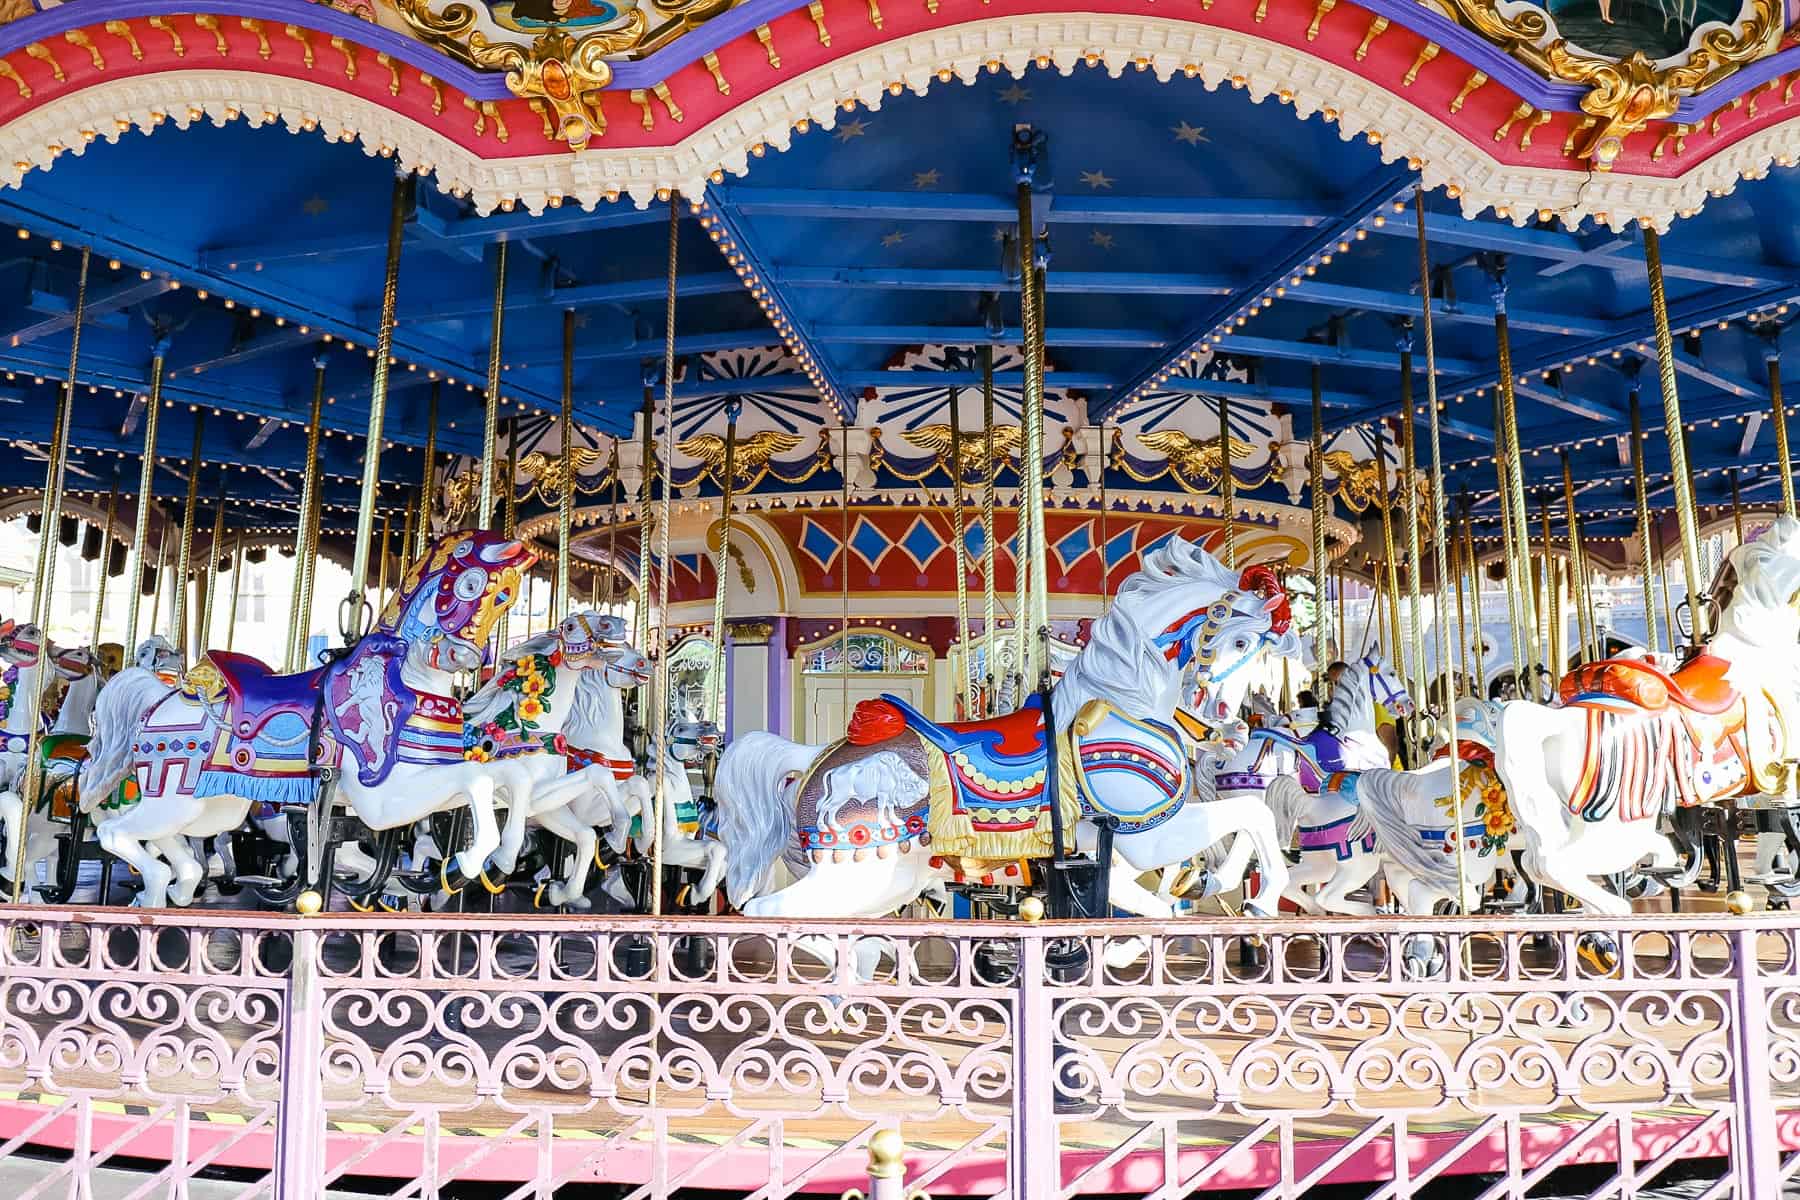 Prince Charming Regal Carrousel ride at Magic Kingdom 